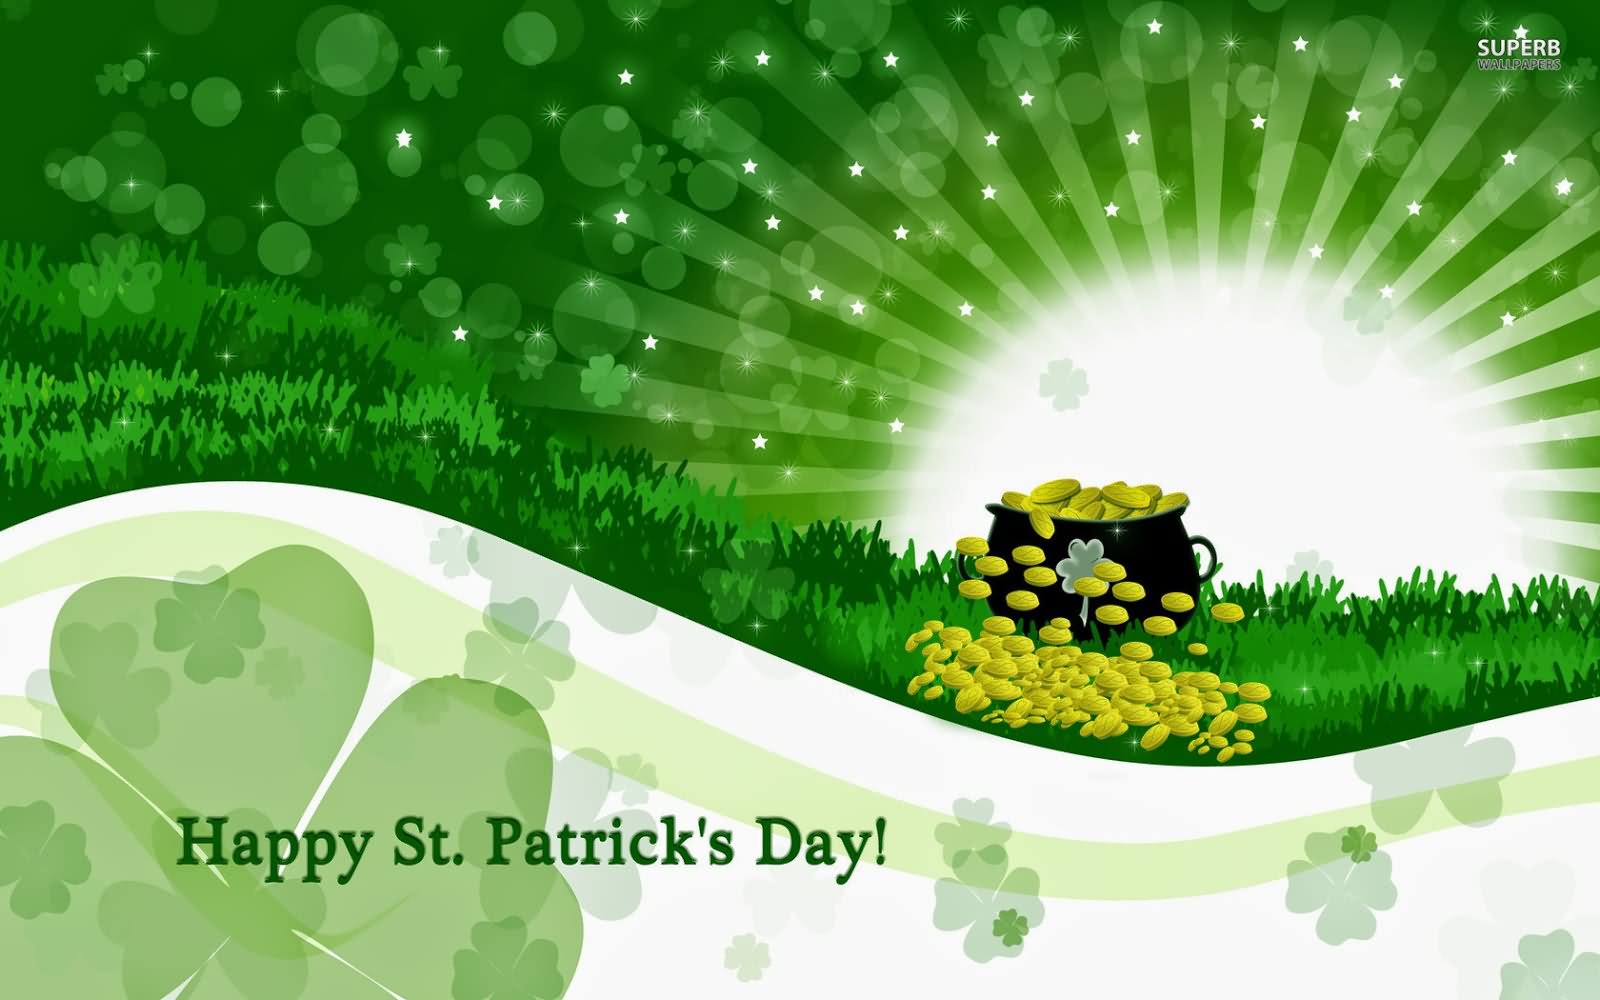 Happy St. Patrick's Day HD Wallpaper Image